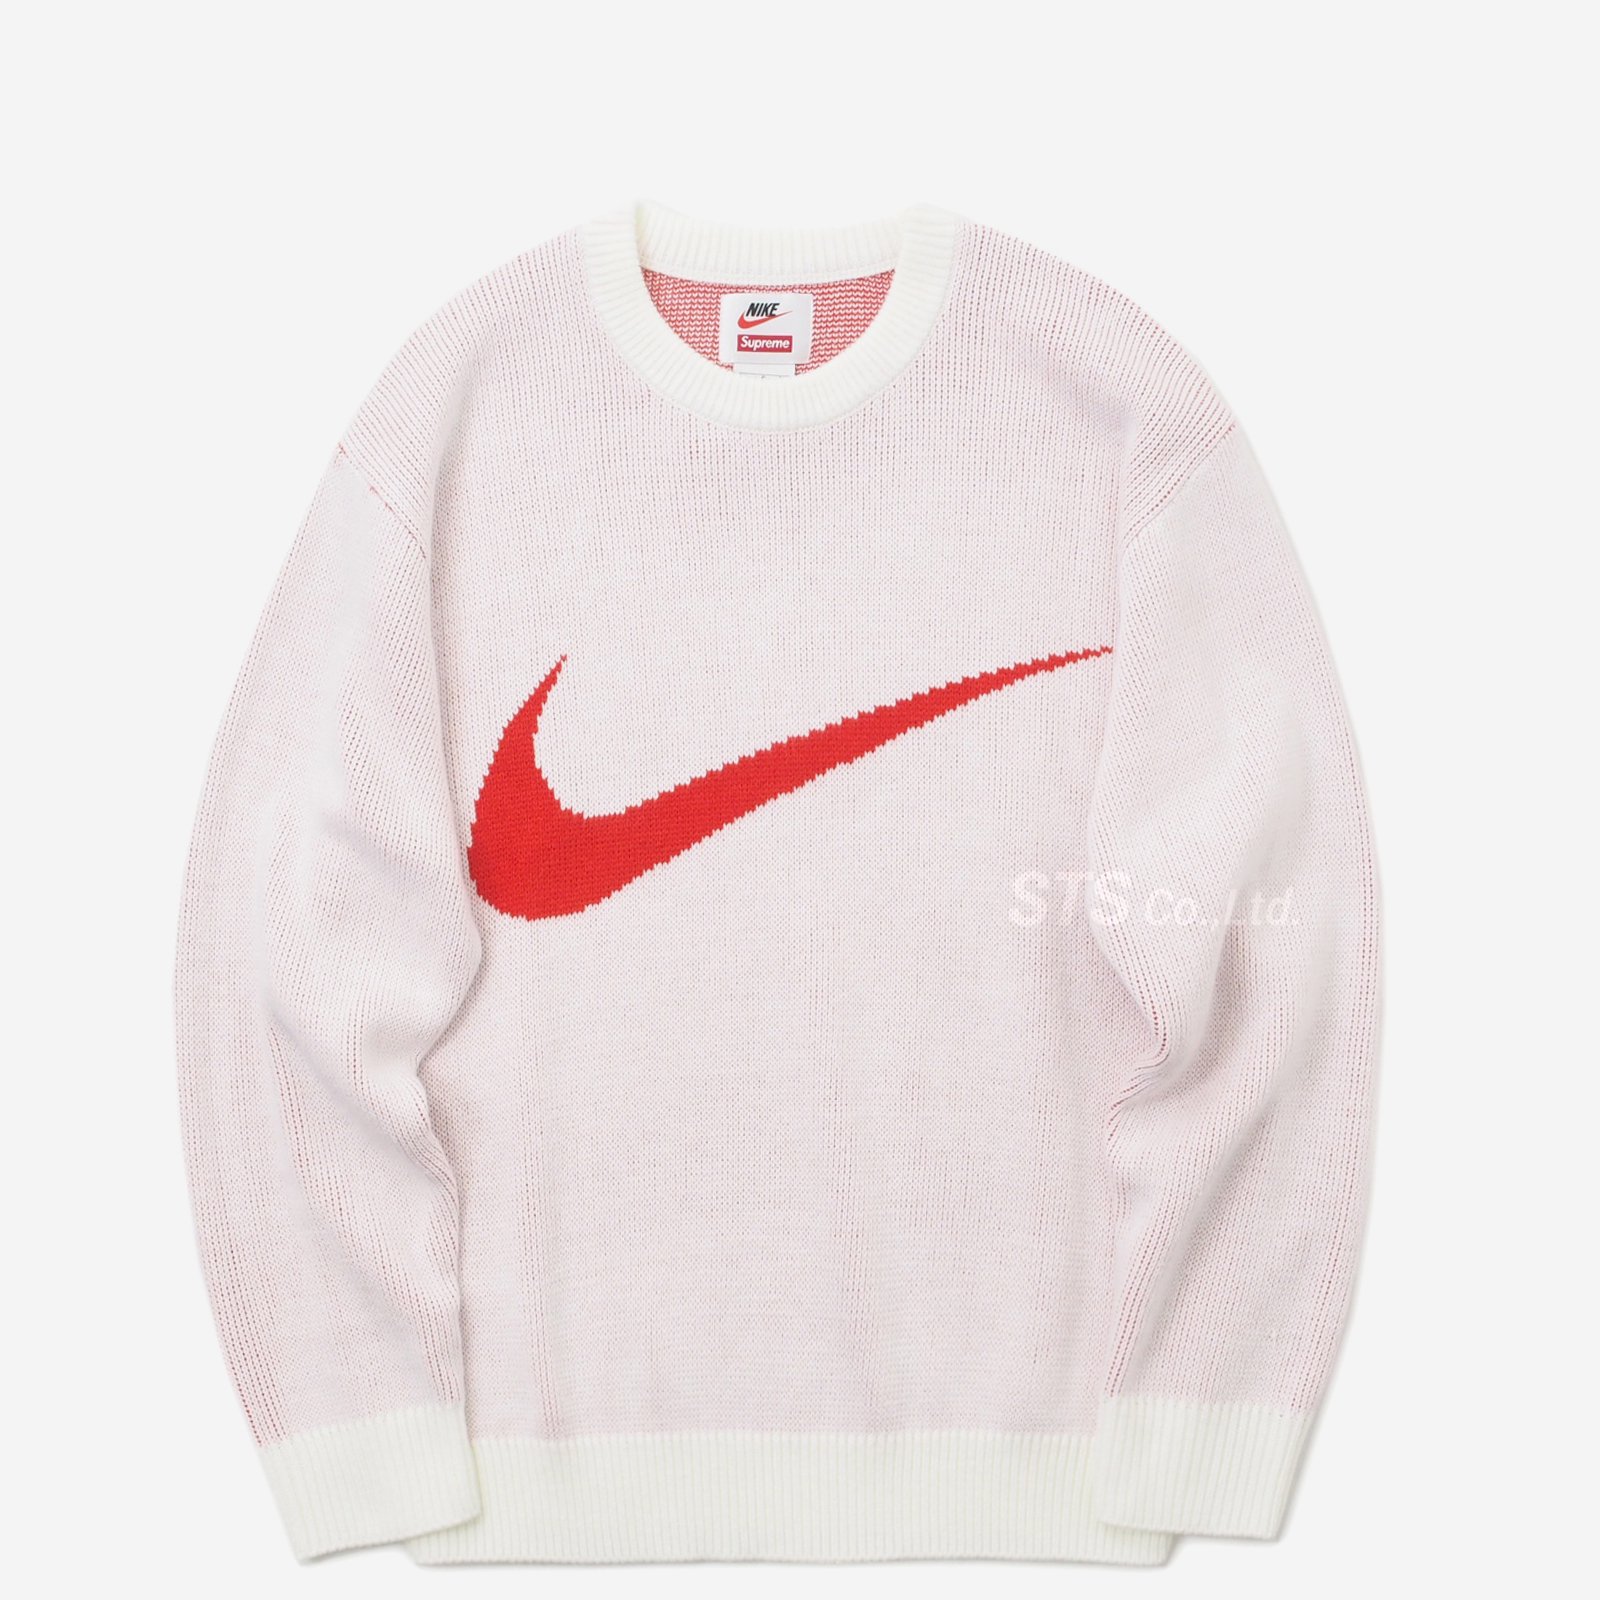 Supreme/Nike Swoosh Sweater - ParkSIDER